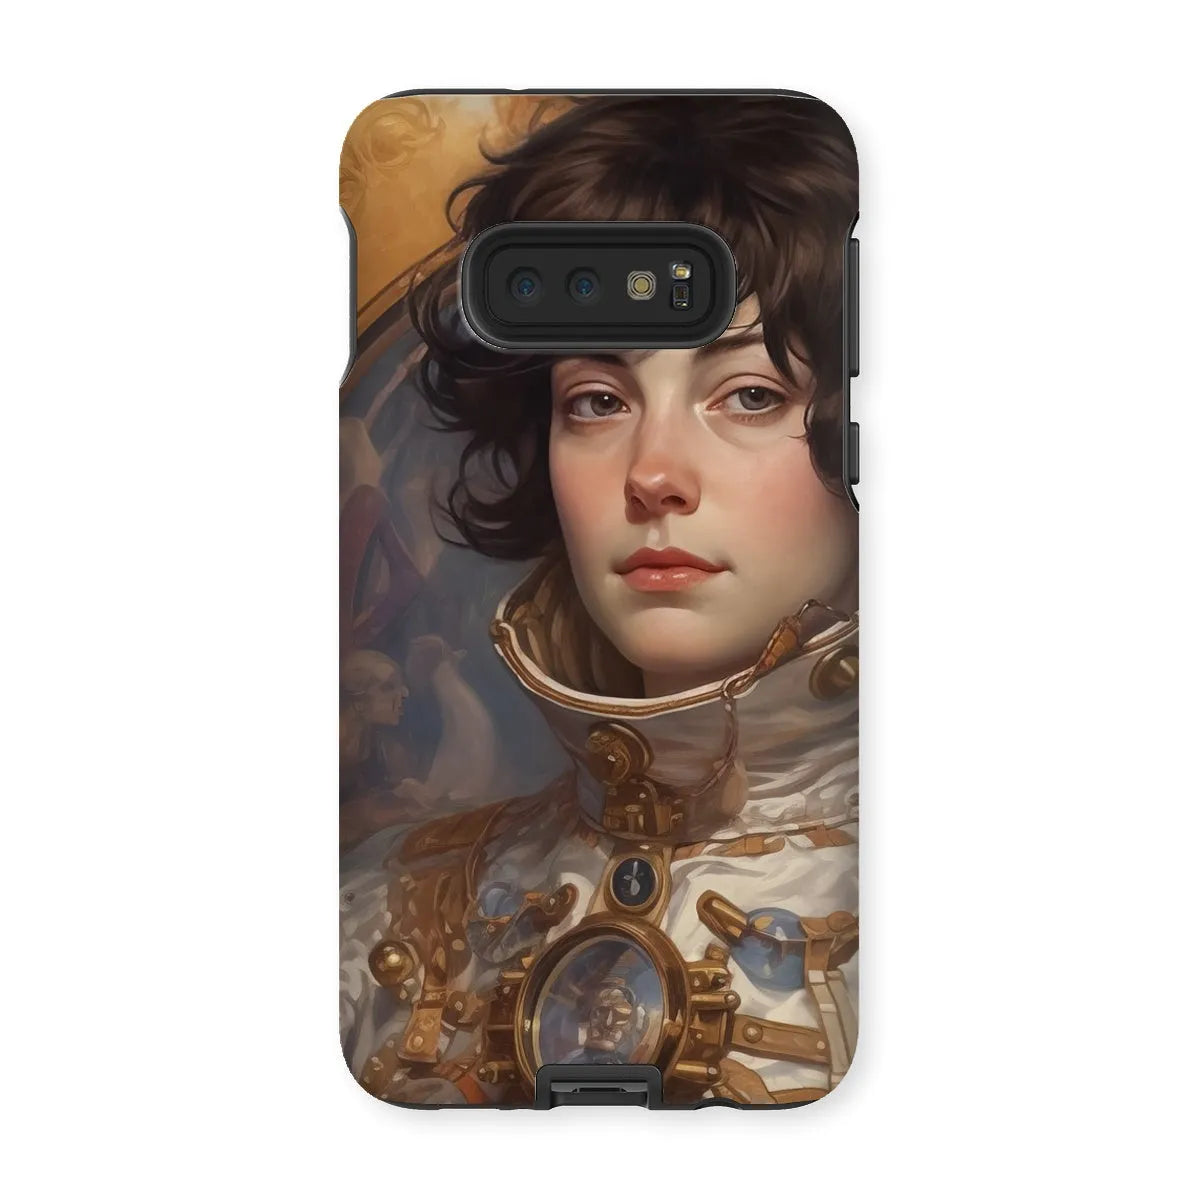 Chloé The Lesbian Astronaut - Space Aesthetic Art Phone Case - Samsung Galaxy S10e / Matte - Mobile Phone Cases